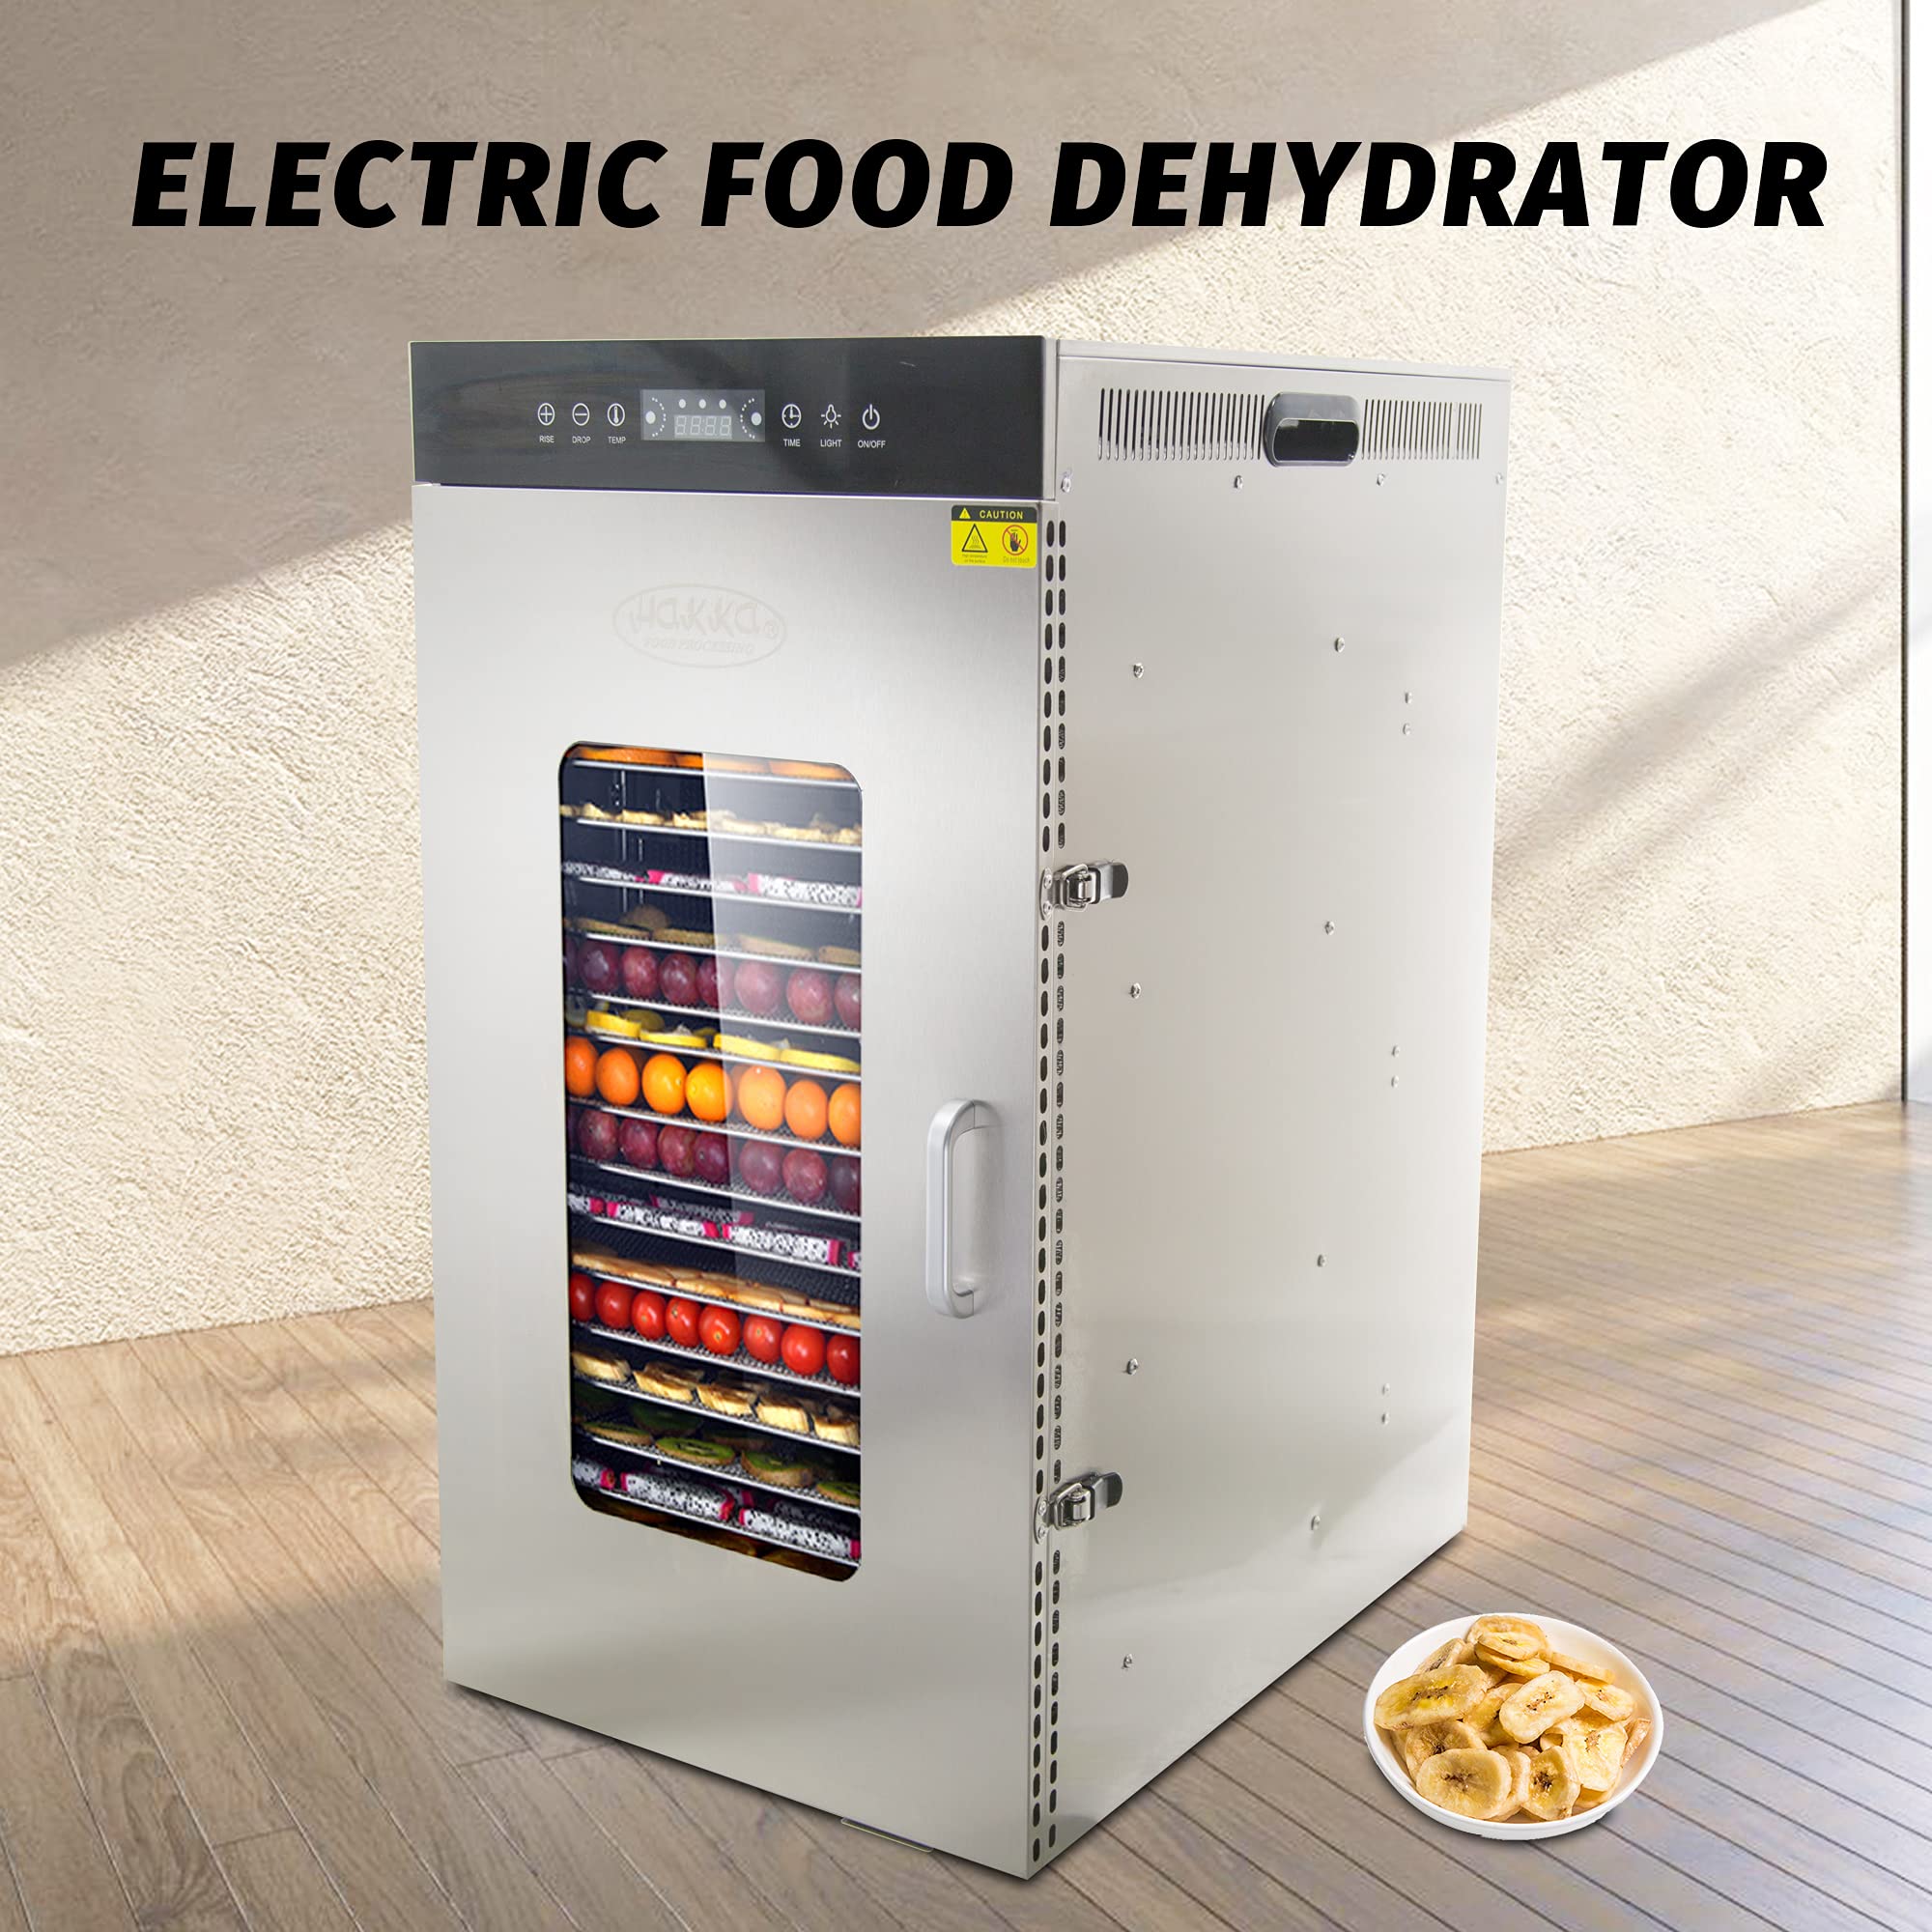 Hakka Commercial Food Dehydrator for Jerky, 20 Stainless Steel